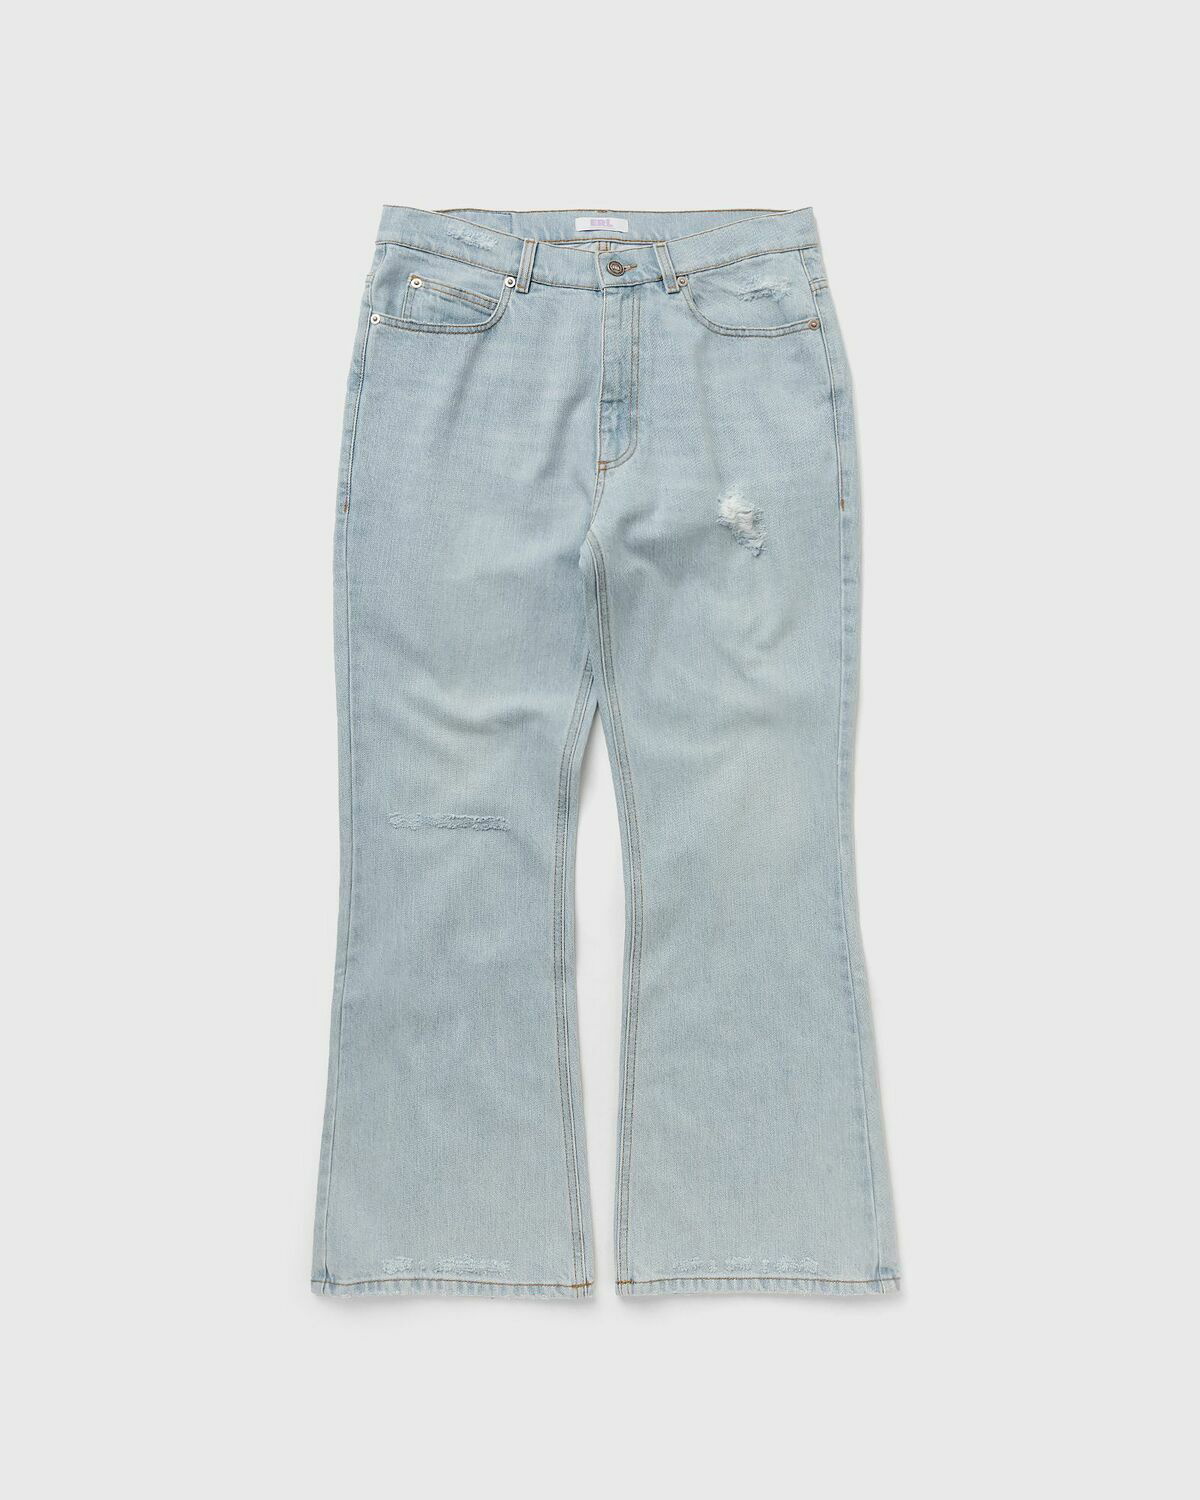 Distressed Denim Pants for Women Plus Size Raw Hem Skinny Wash Jeans Solid  Color Buckle Waist Capri Trousers with Pockets - Walmart.com